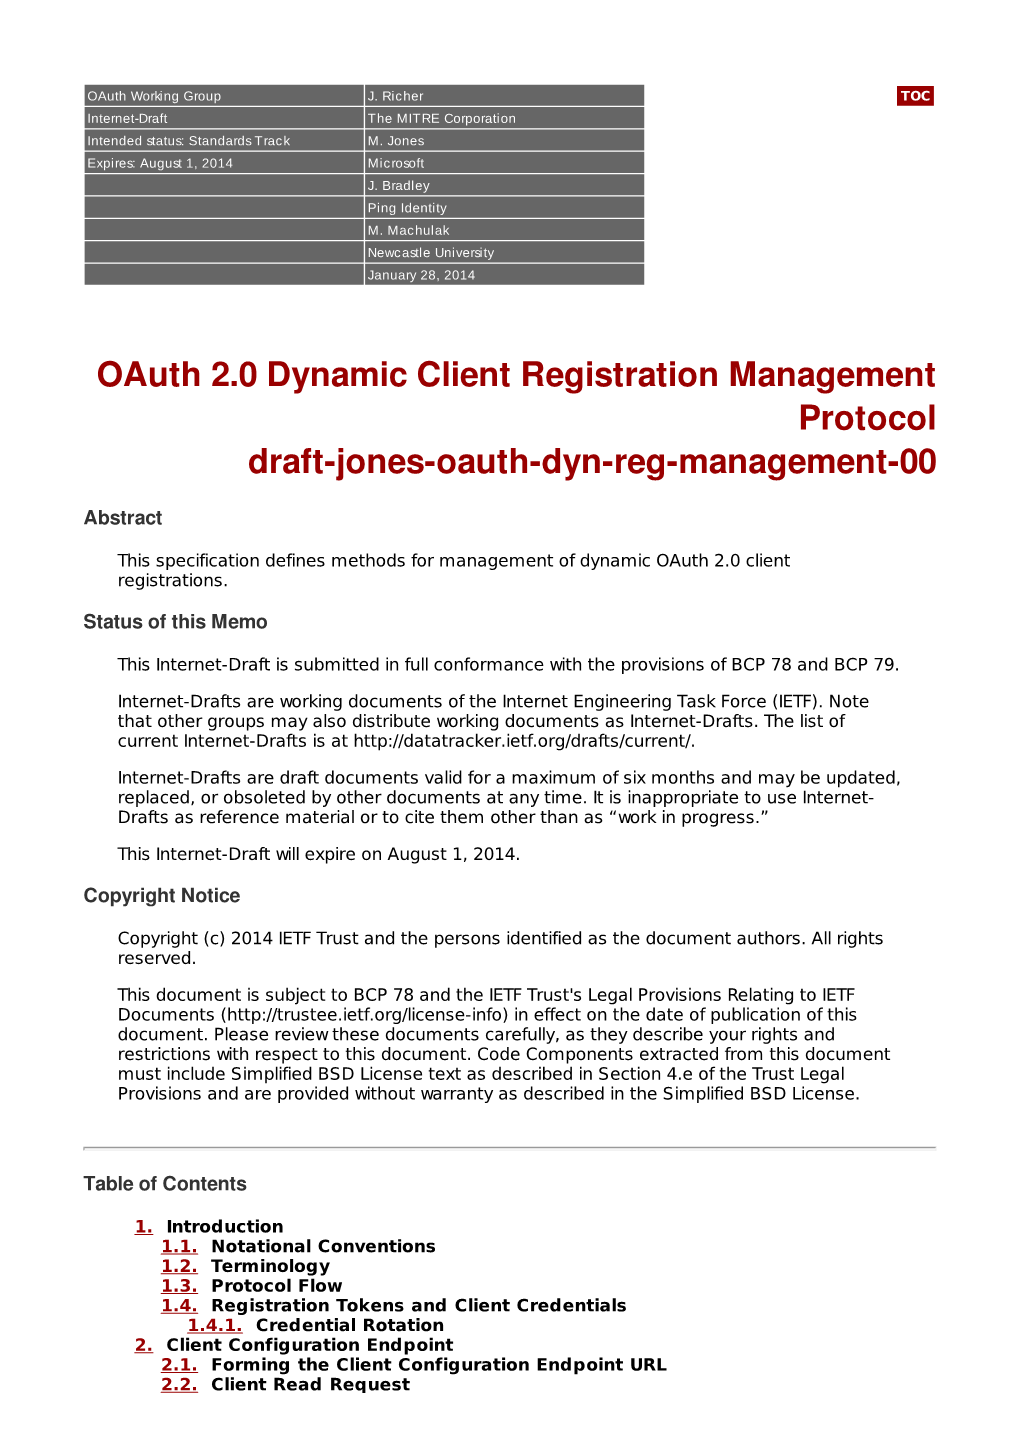 Oauth 2.0 Dynamic Client Registration Management Protocol Draft-Jones-Oauth-Dyn-Reg-Management-00